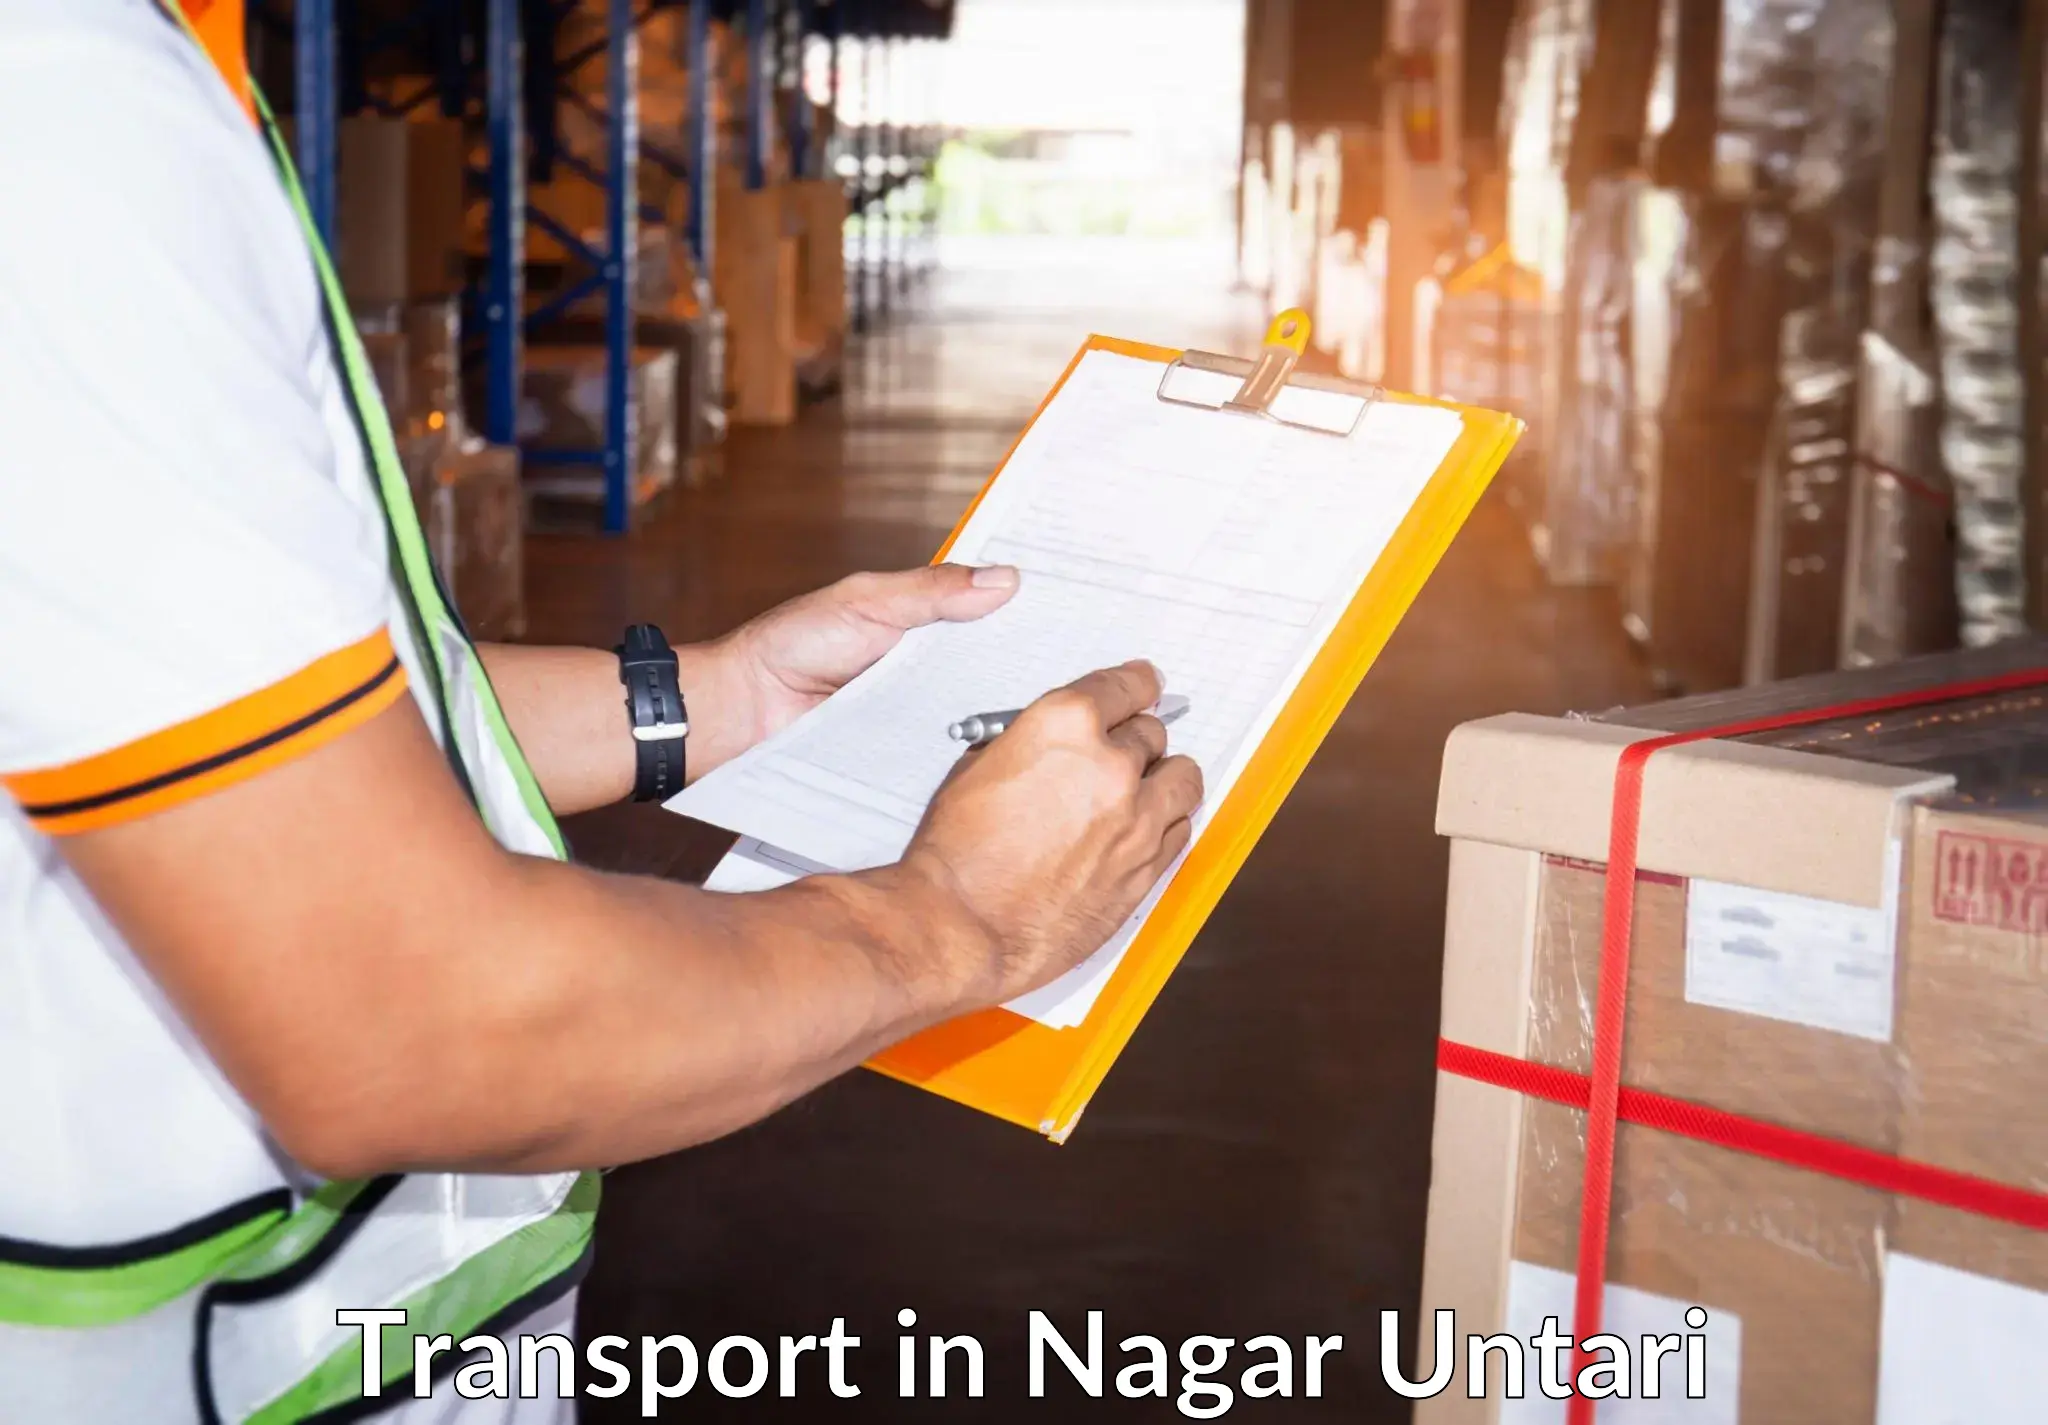 Container transport service in Nagar Untari